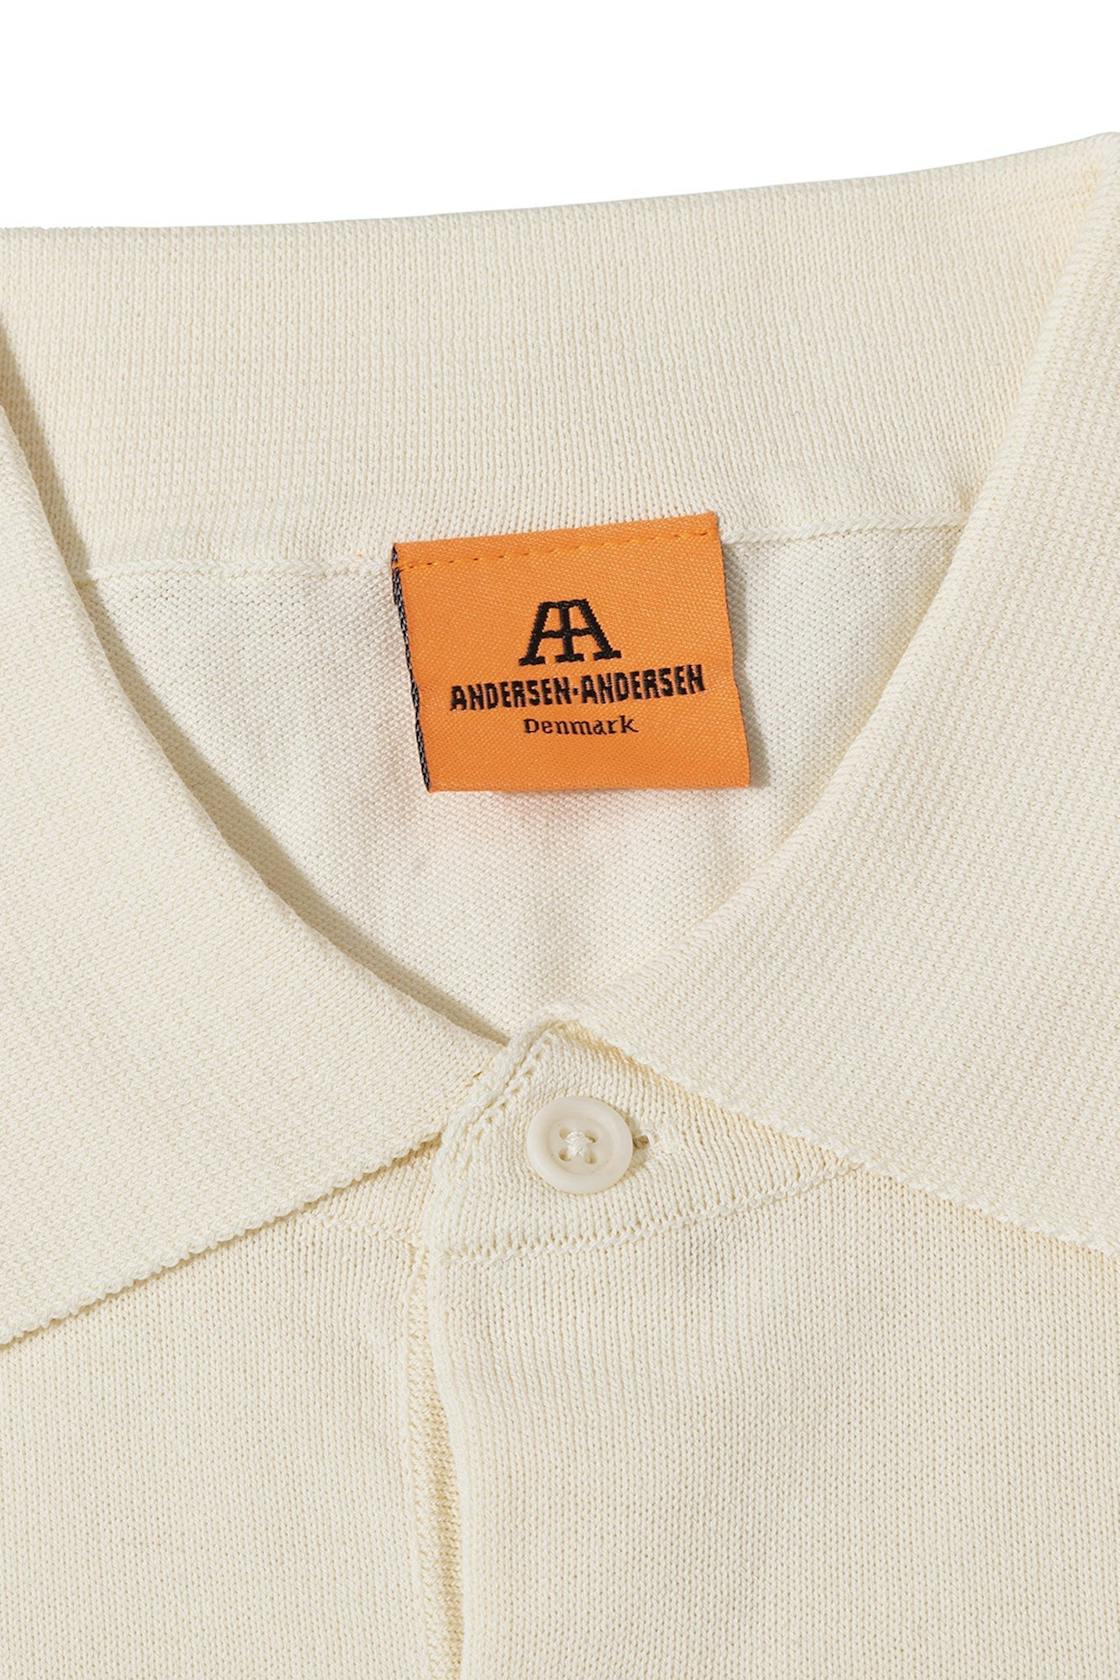 Andersen-Andersen Off White Cotton Long-Sleeve Polo